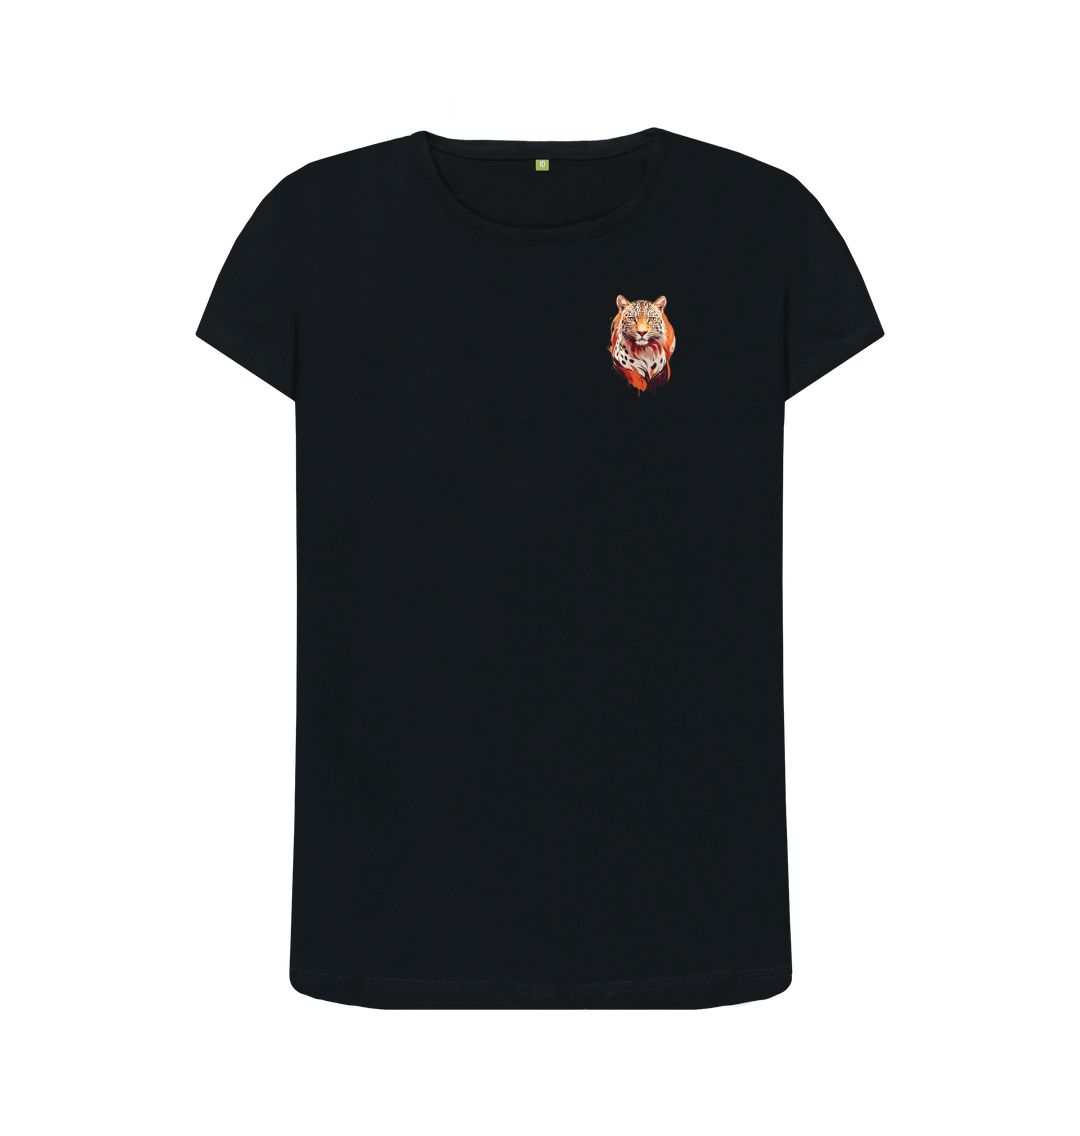 Women's leopard design crew neck organic cotton t-shirt - Premium Eco Chic Printed T-shirt from Eco Threadz - Just £20! Shop now at Eco Threadz